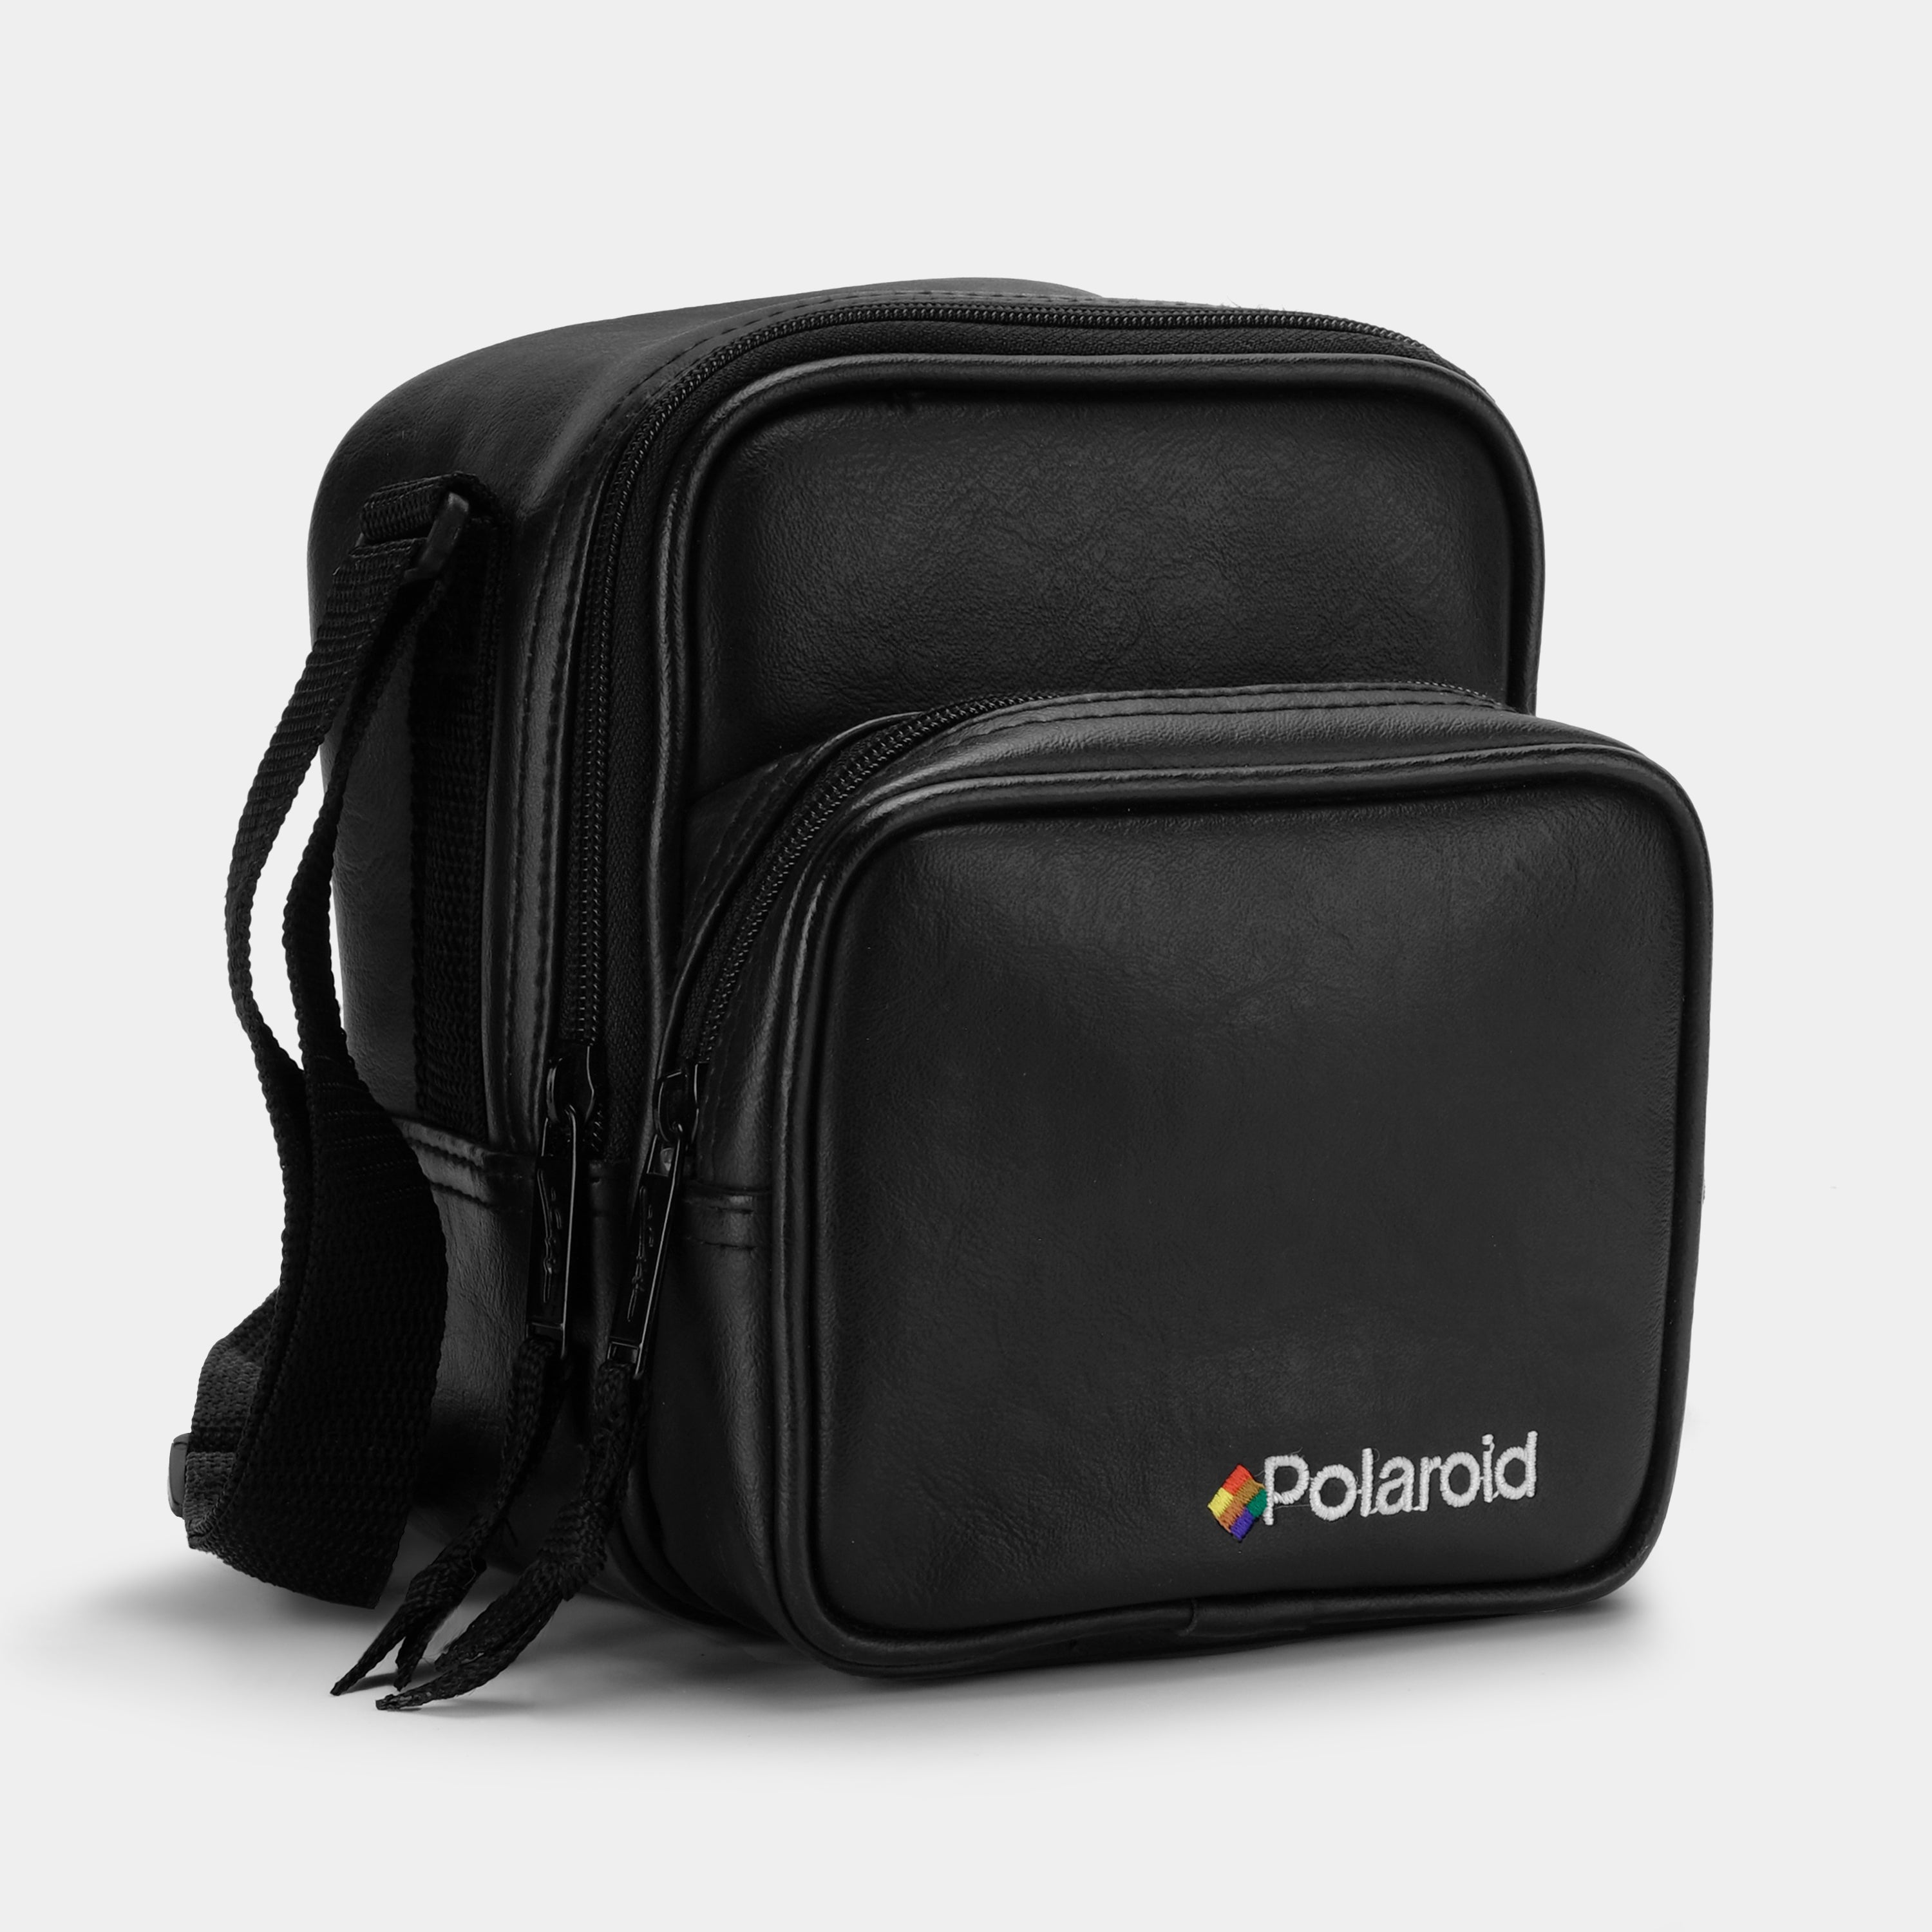 Black Leather Polaroid 600 Camera Bag